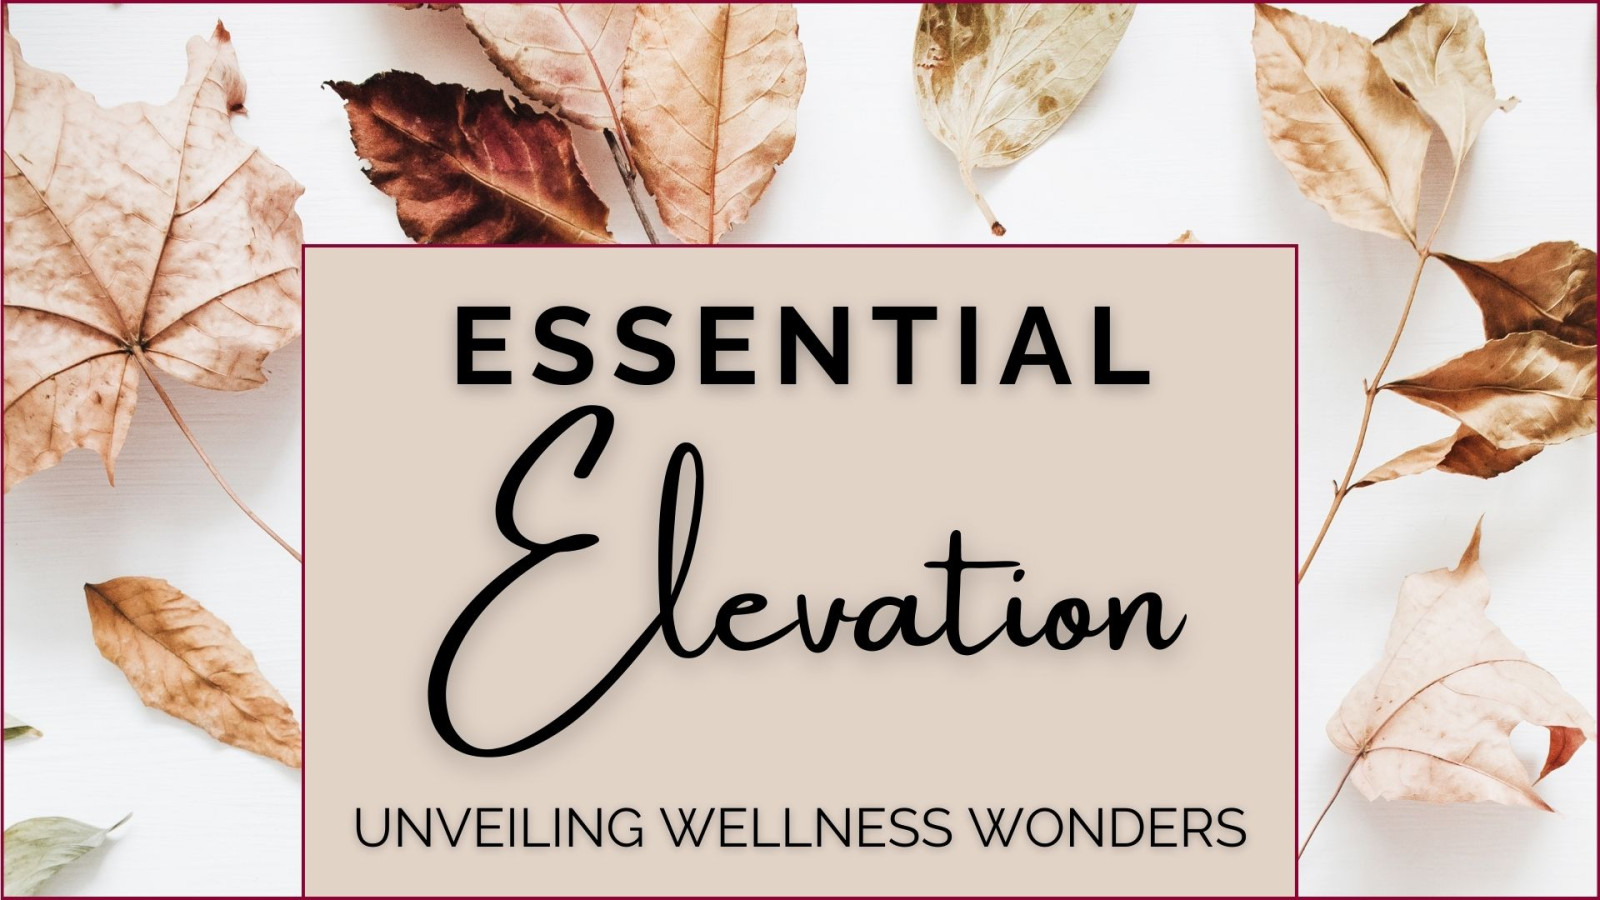 Essential Elevation: Unveiling Wellness Wonders